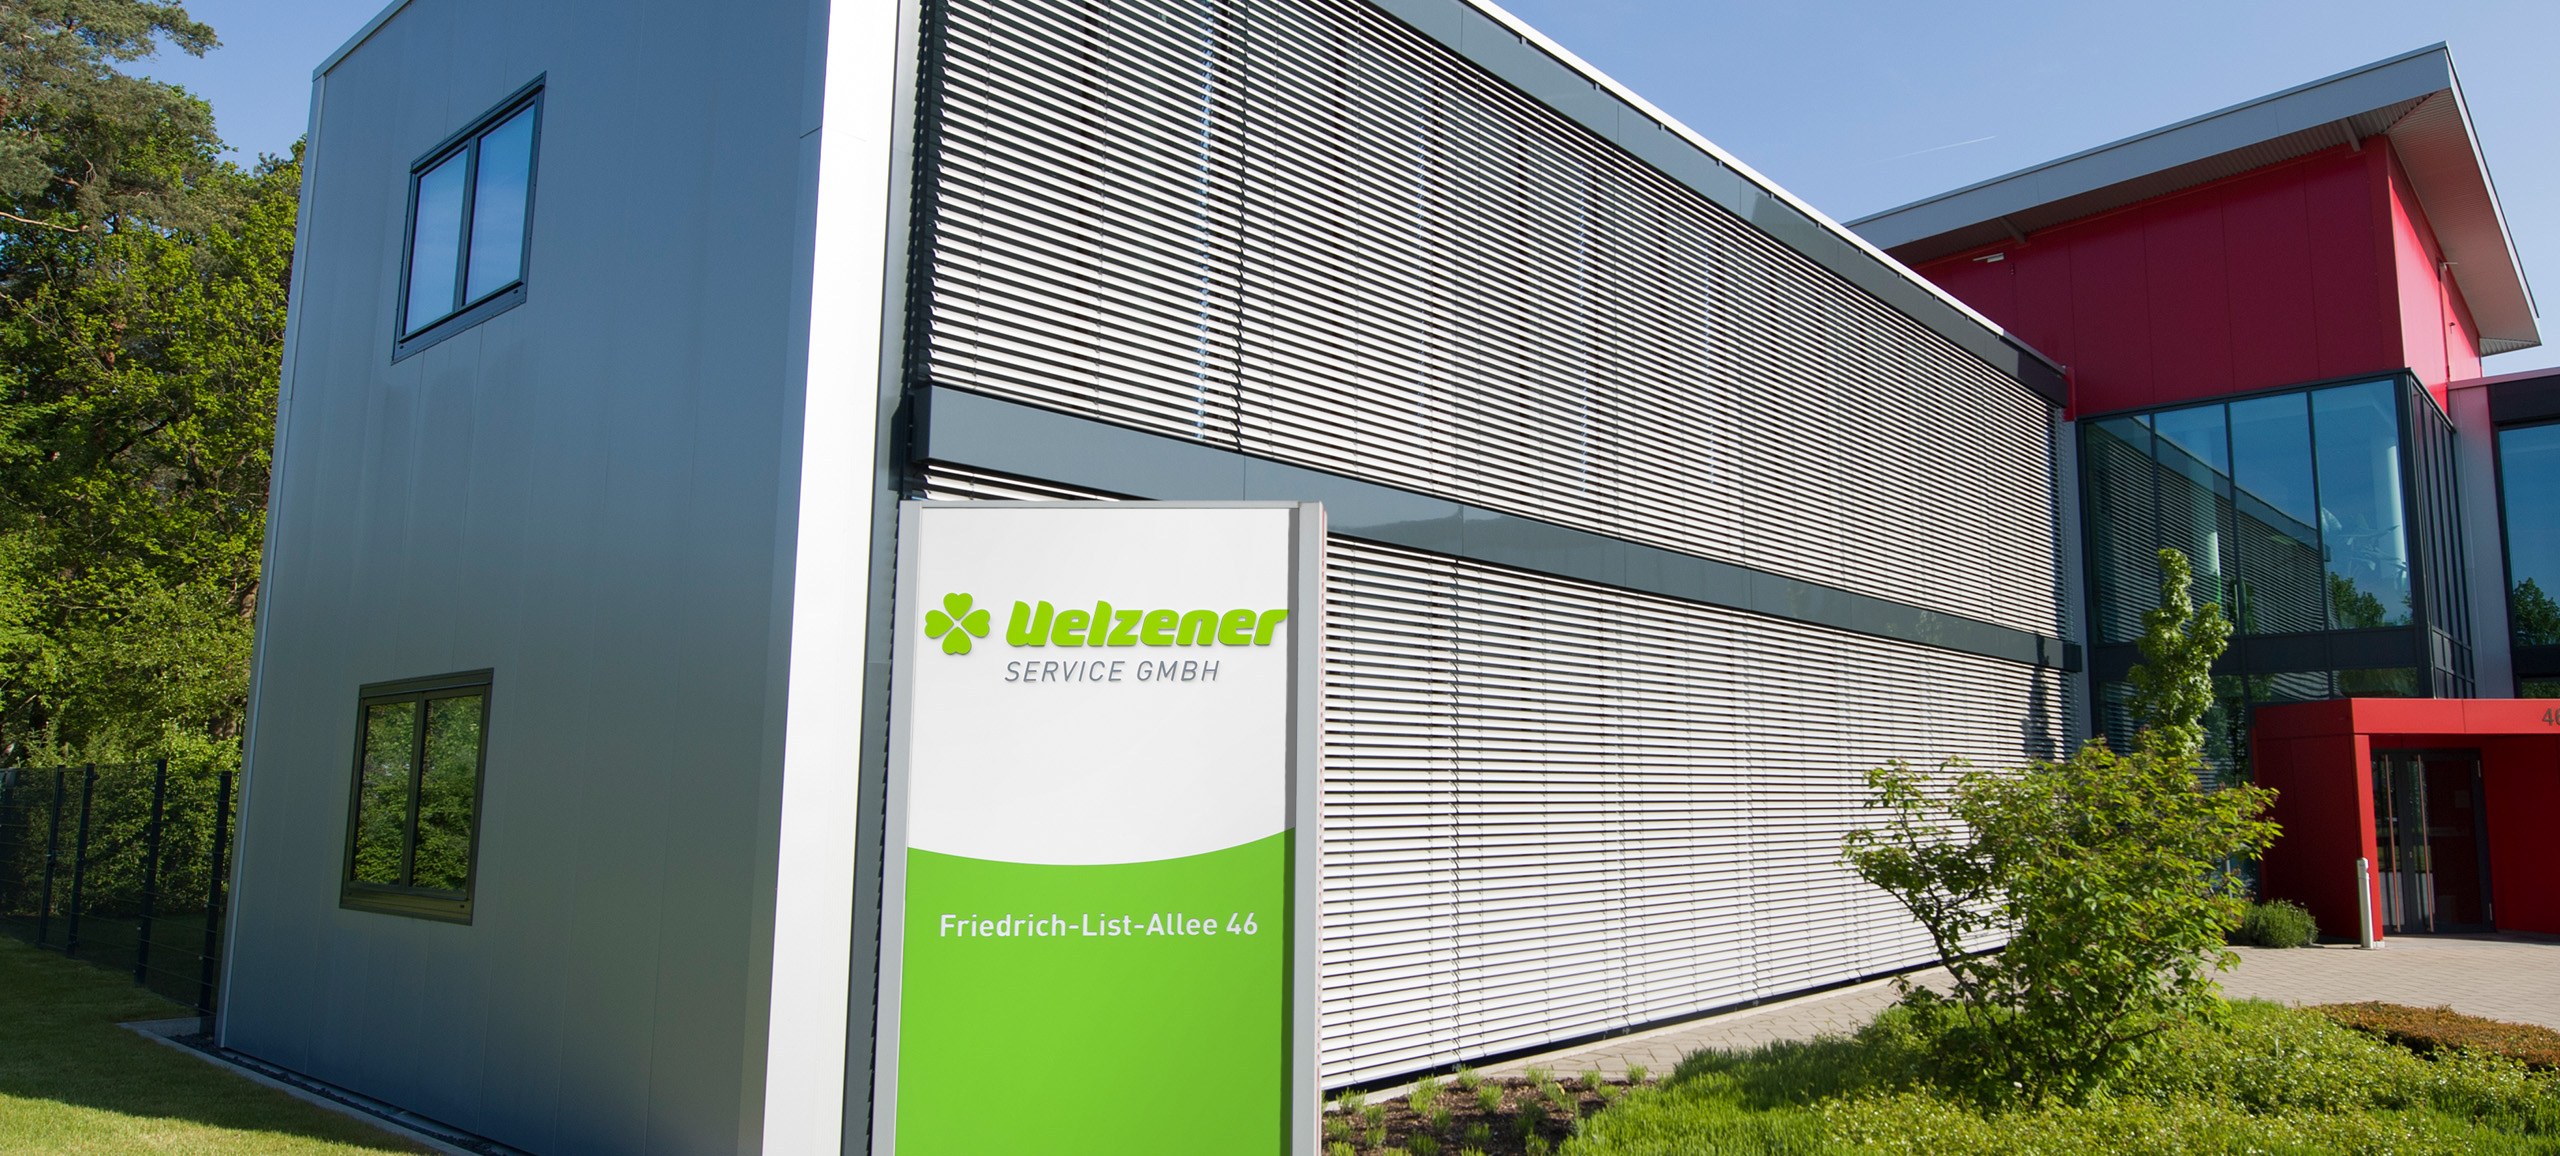 Uelzener Service GmbH Gebäude in Wegberg